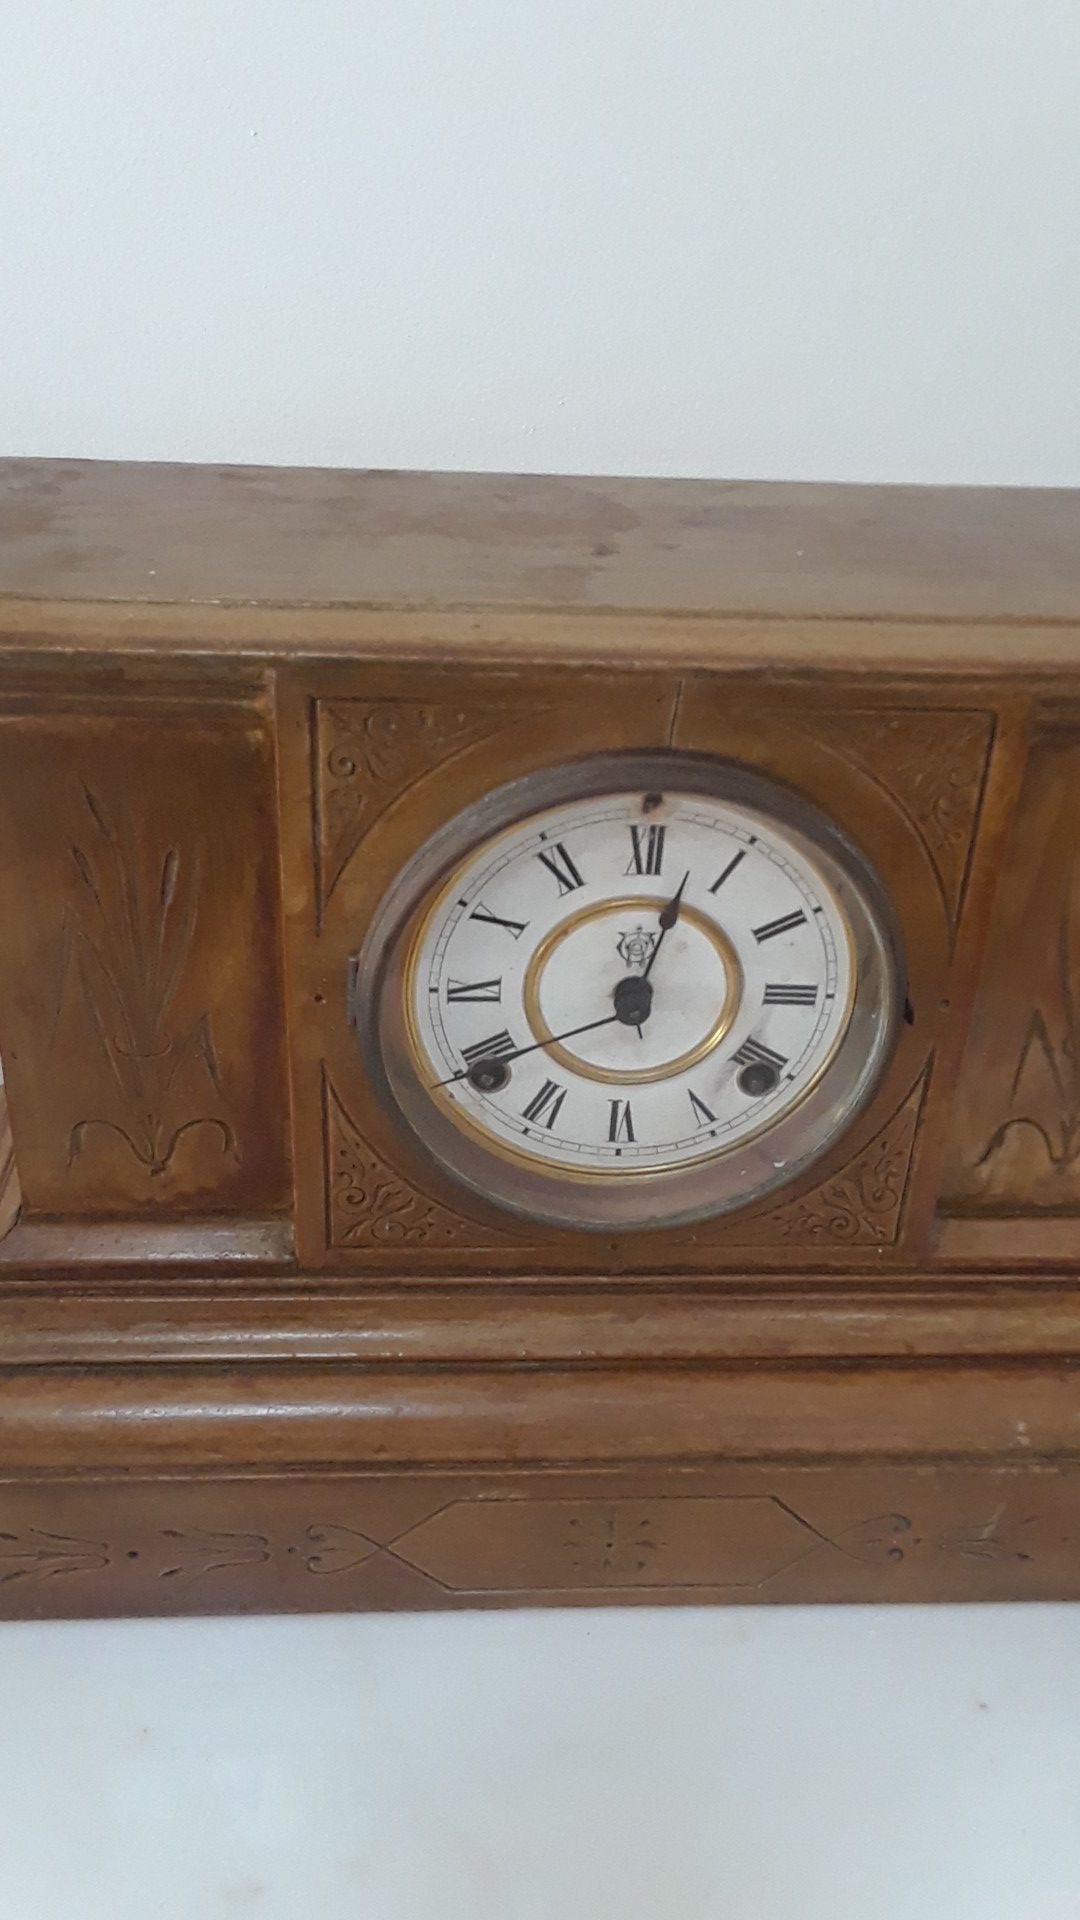 Westbury antique clock not working